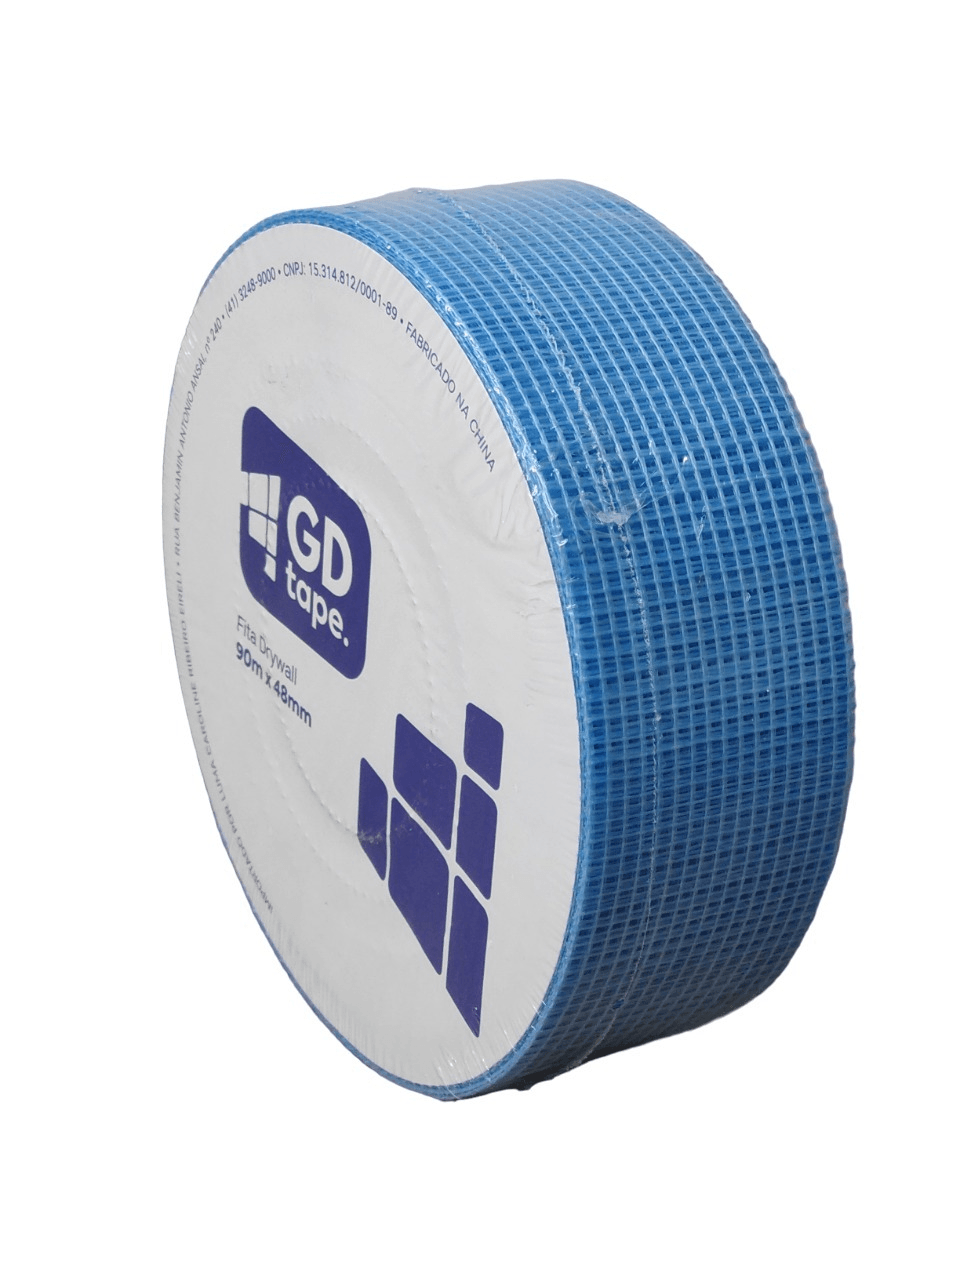 Fita Fixadora Multiuso Velcro Azul 19cmx3m, HellermannTyton - PT 1